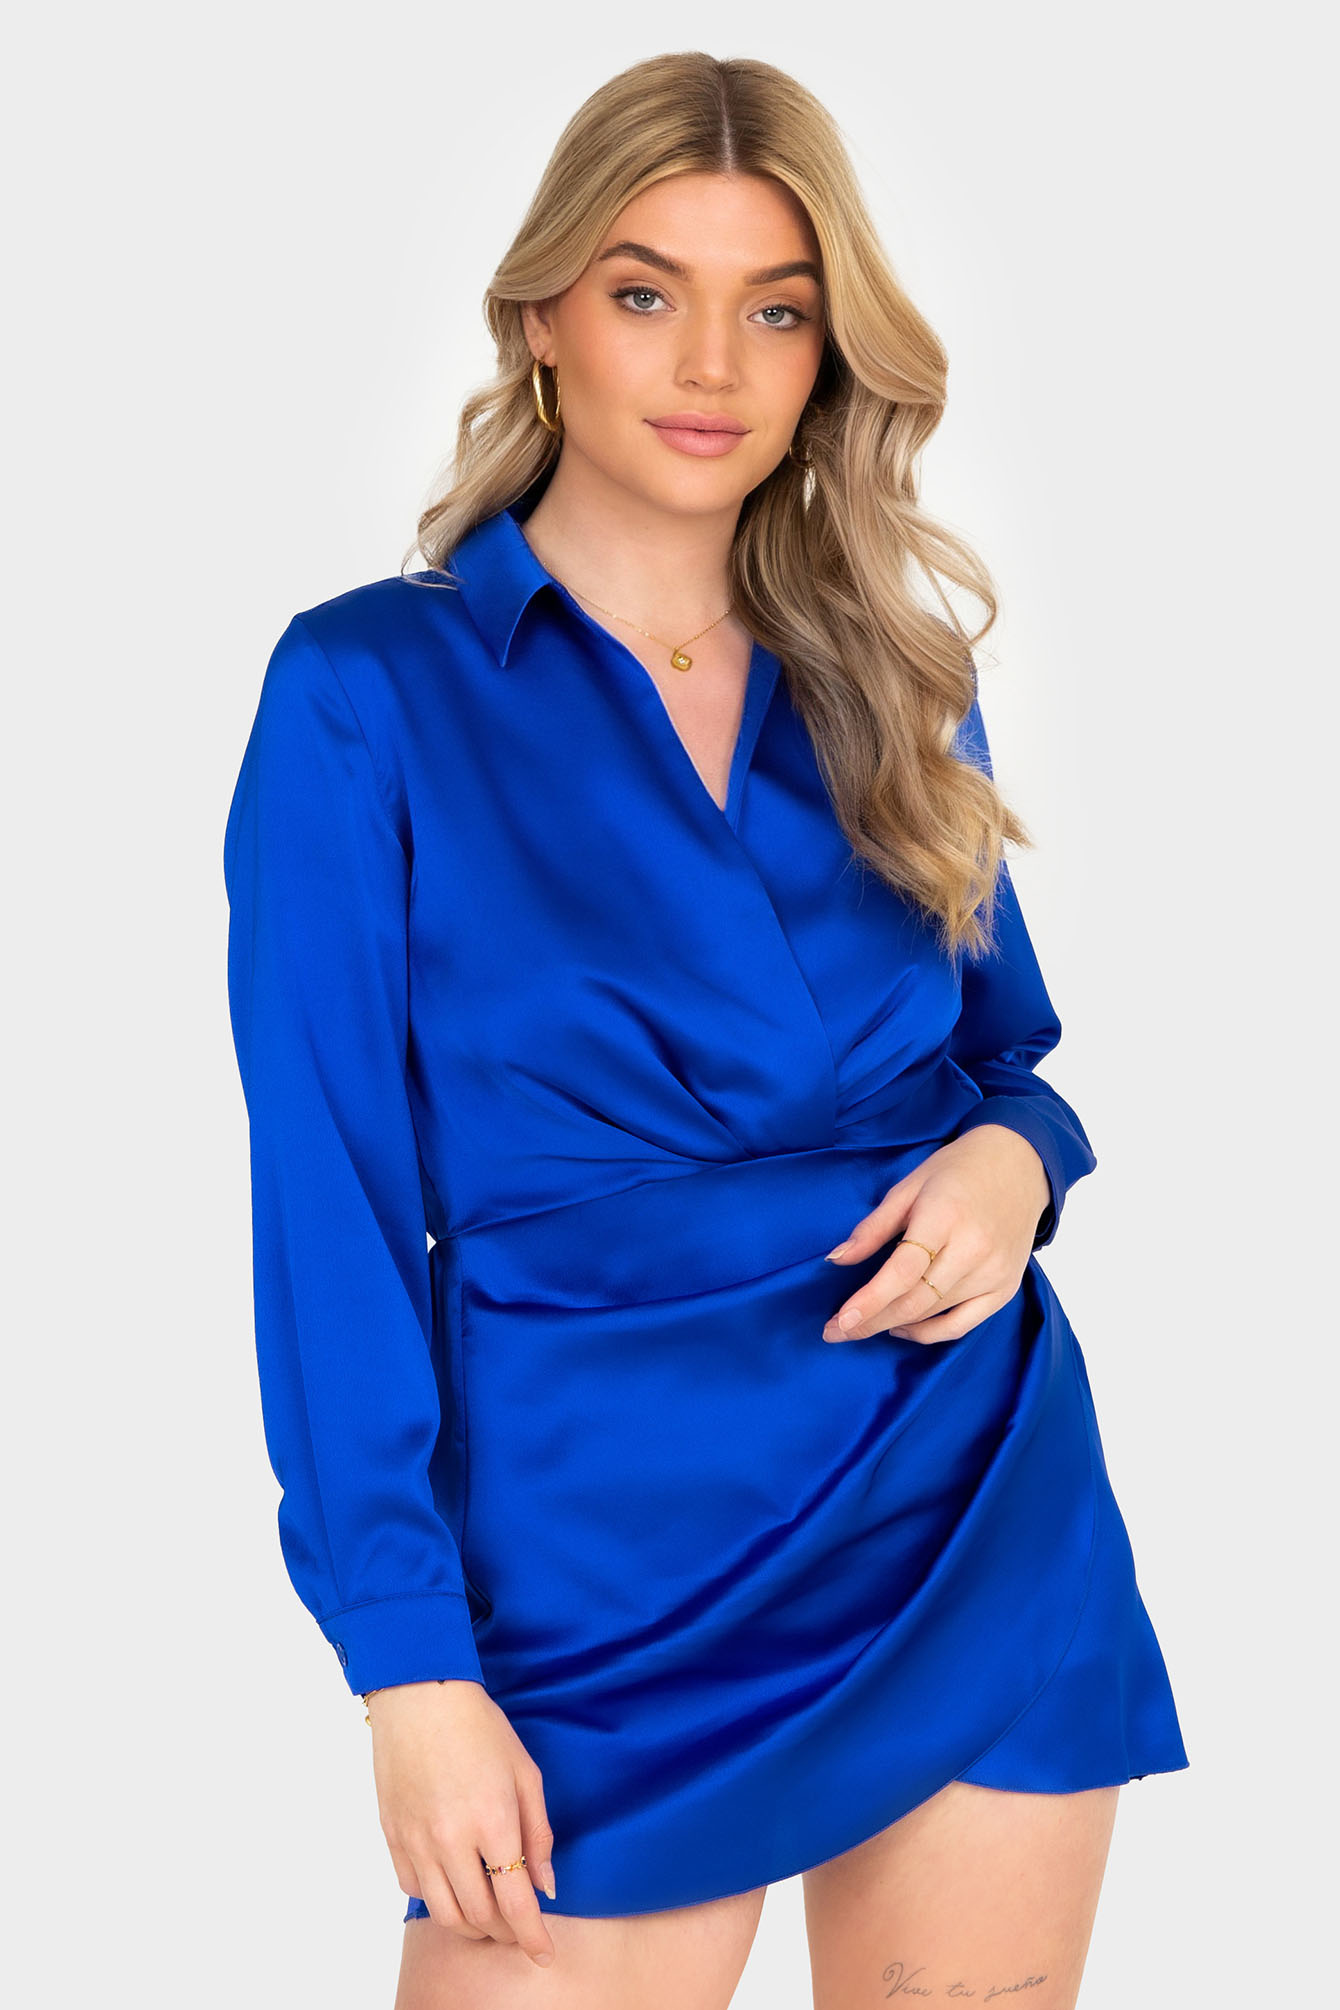 Shop blauwe satijnen jurk | - Elise Store